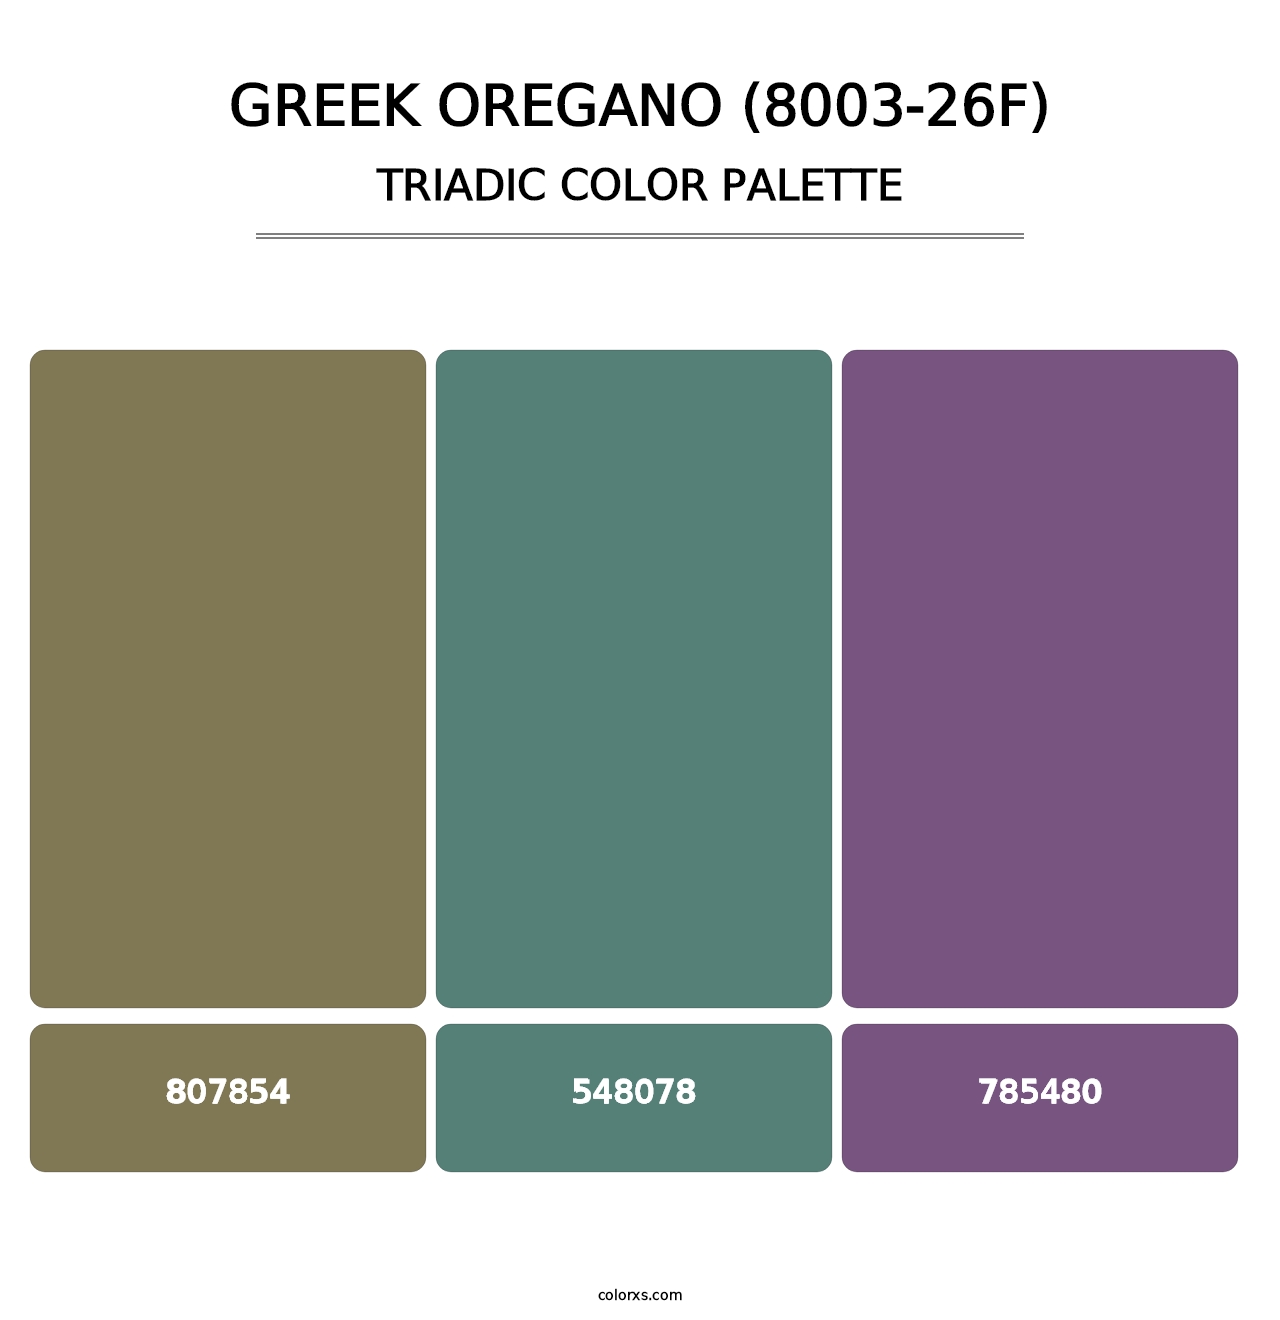 Greek Oregano (8003-26F) - Triadic Color Palette